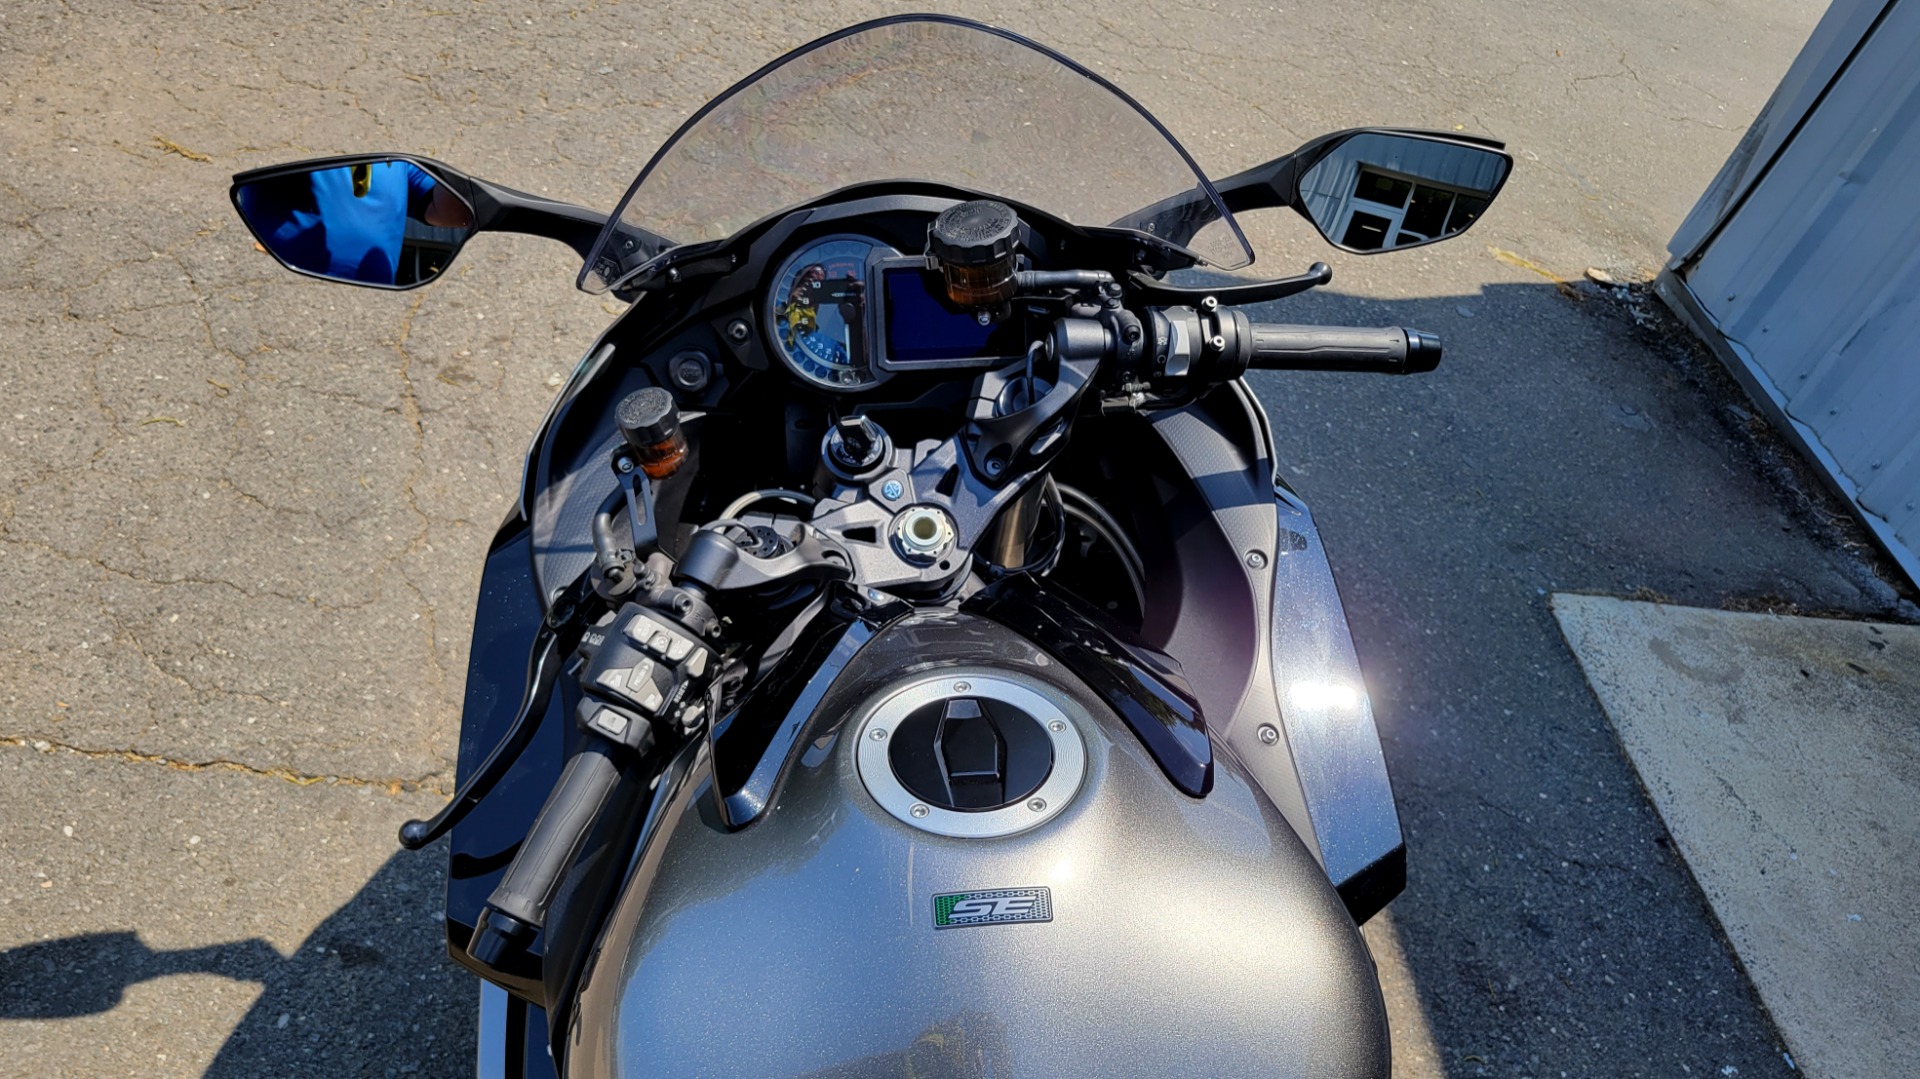 Used 2019 Kawasaki NINJA H2 SX / 998CC 197HP / SPORT TOURING MOTORCYCLE for sale $23,000 at Formula Imports in Charlotte NC 28227 9